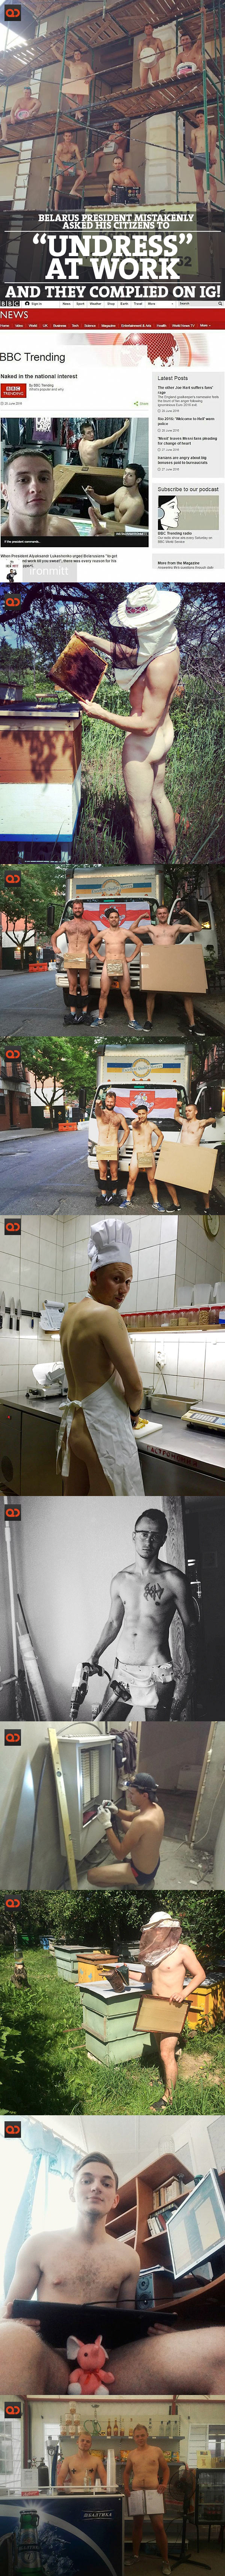 qc-belarus_president_undress_meme-collage01